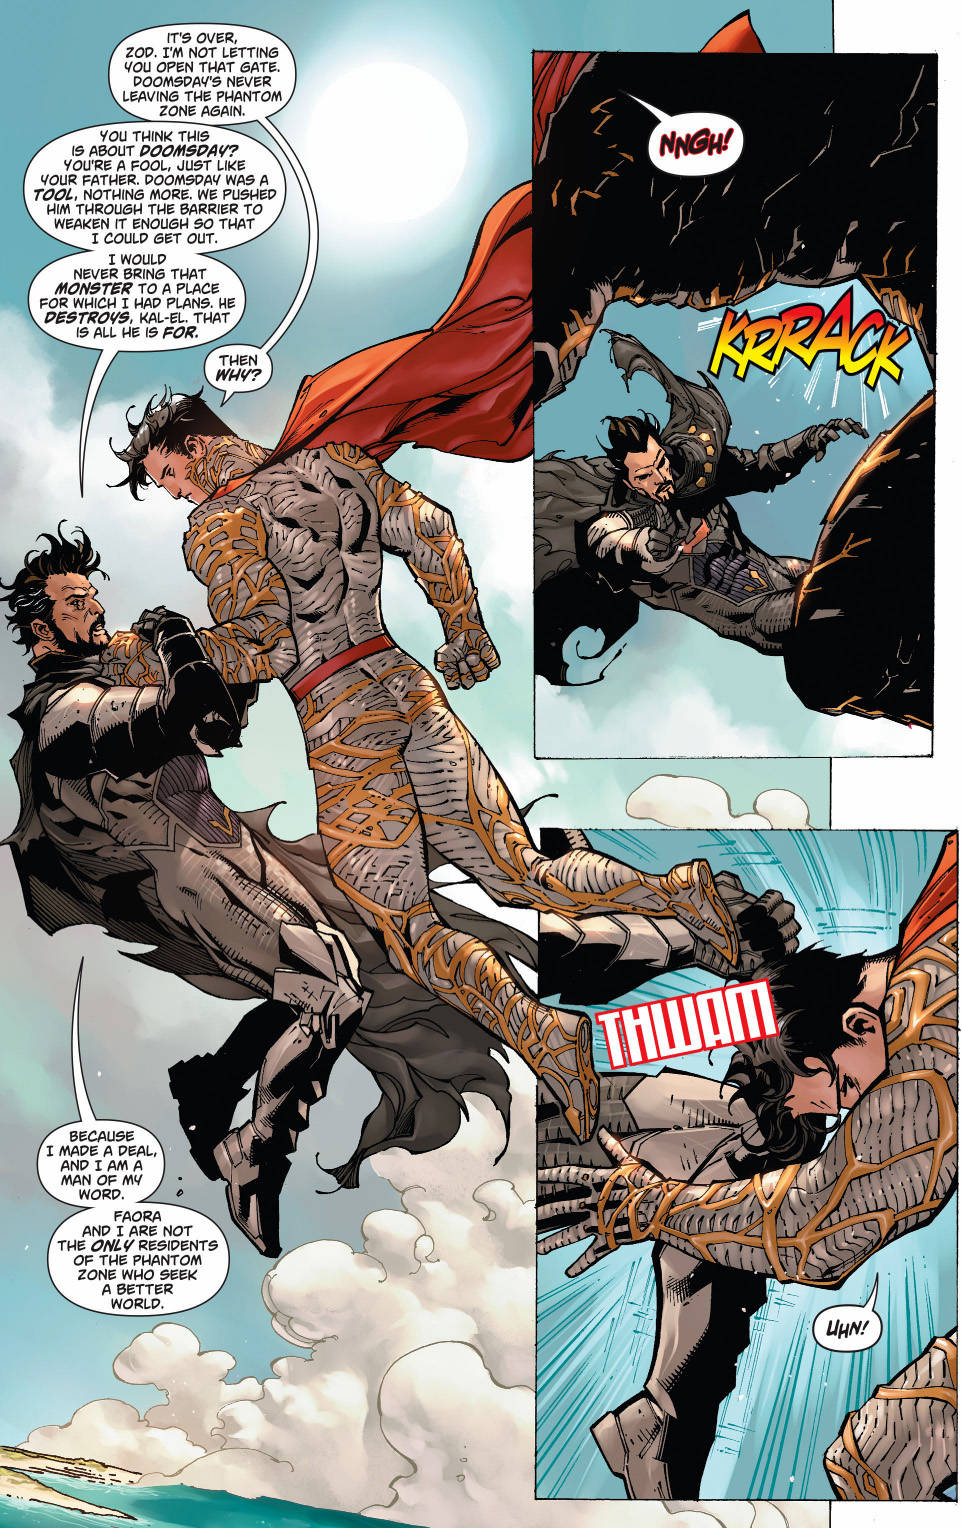 superman-and-wonder-woman-vs-zod-and-faora-2.jpg